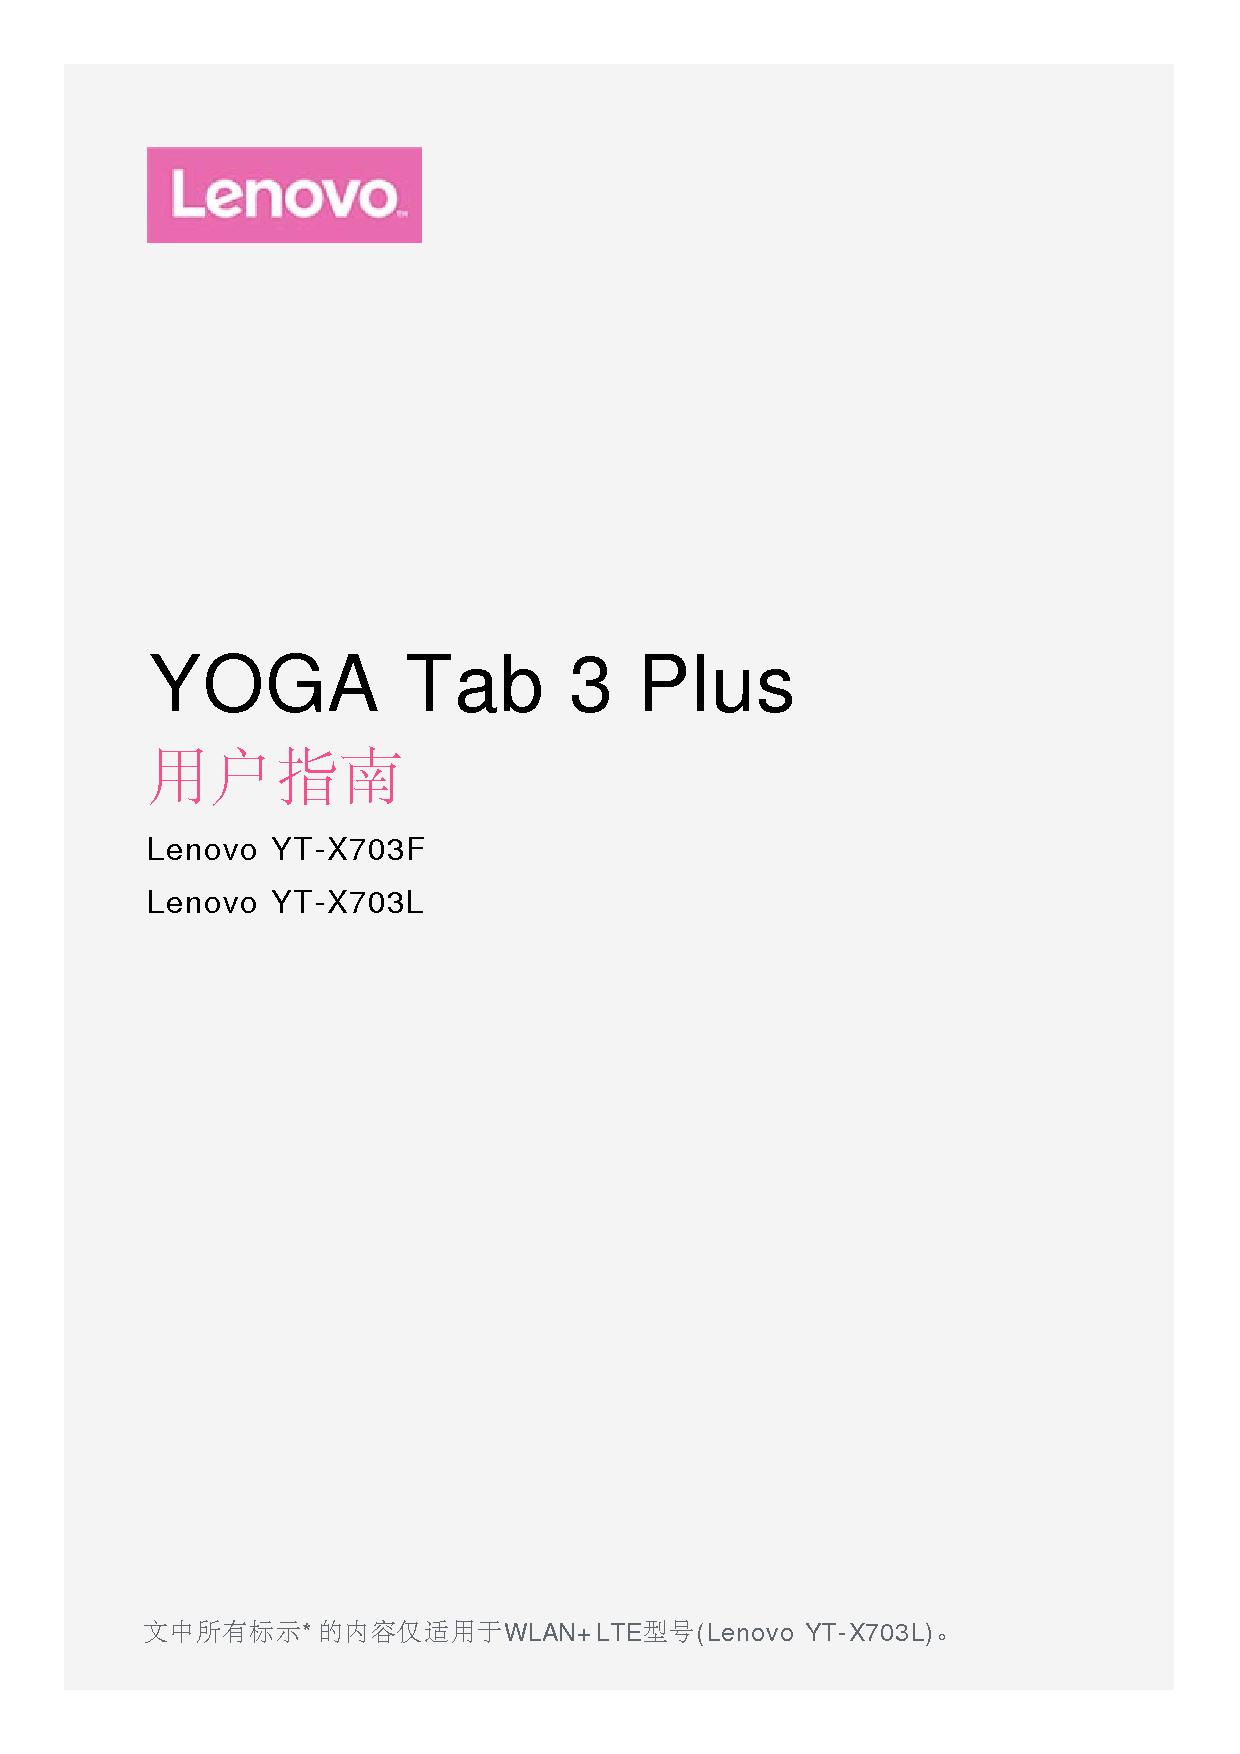 联想 Lenovo YOGA TAB 3 PLUS, YT-X703F 用户指南 封面